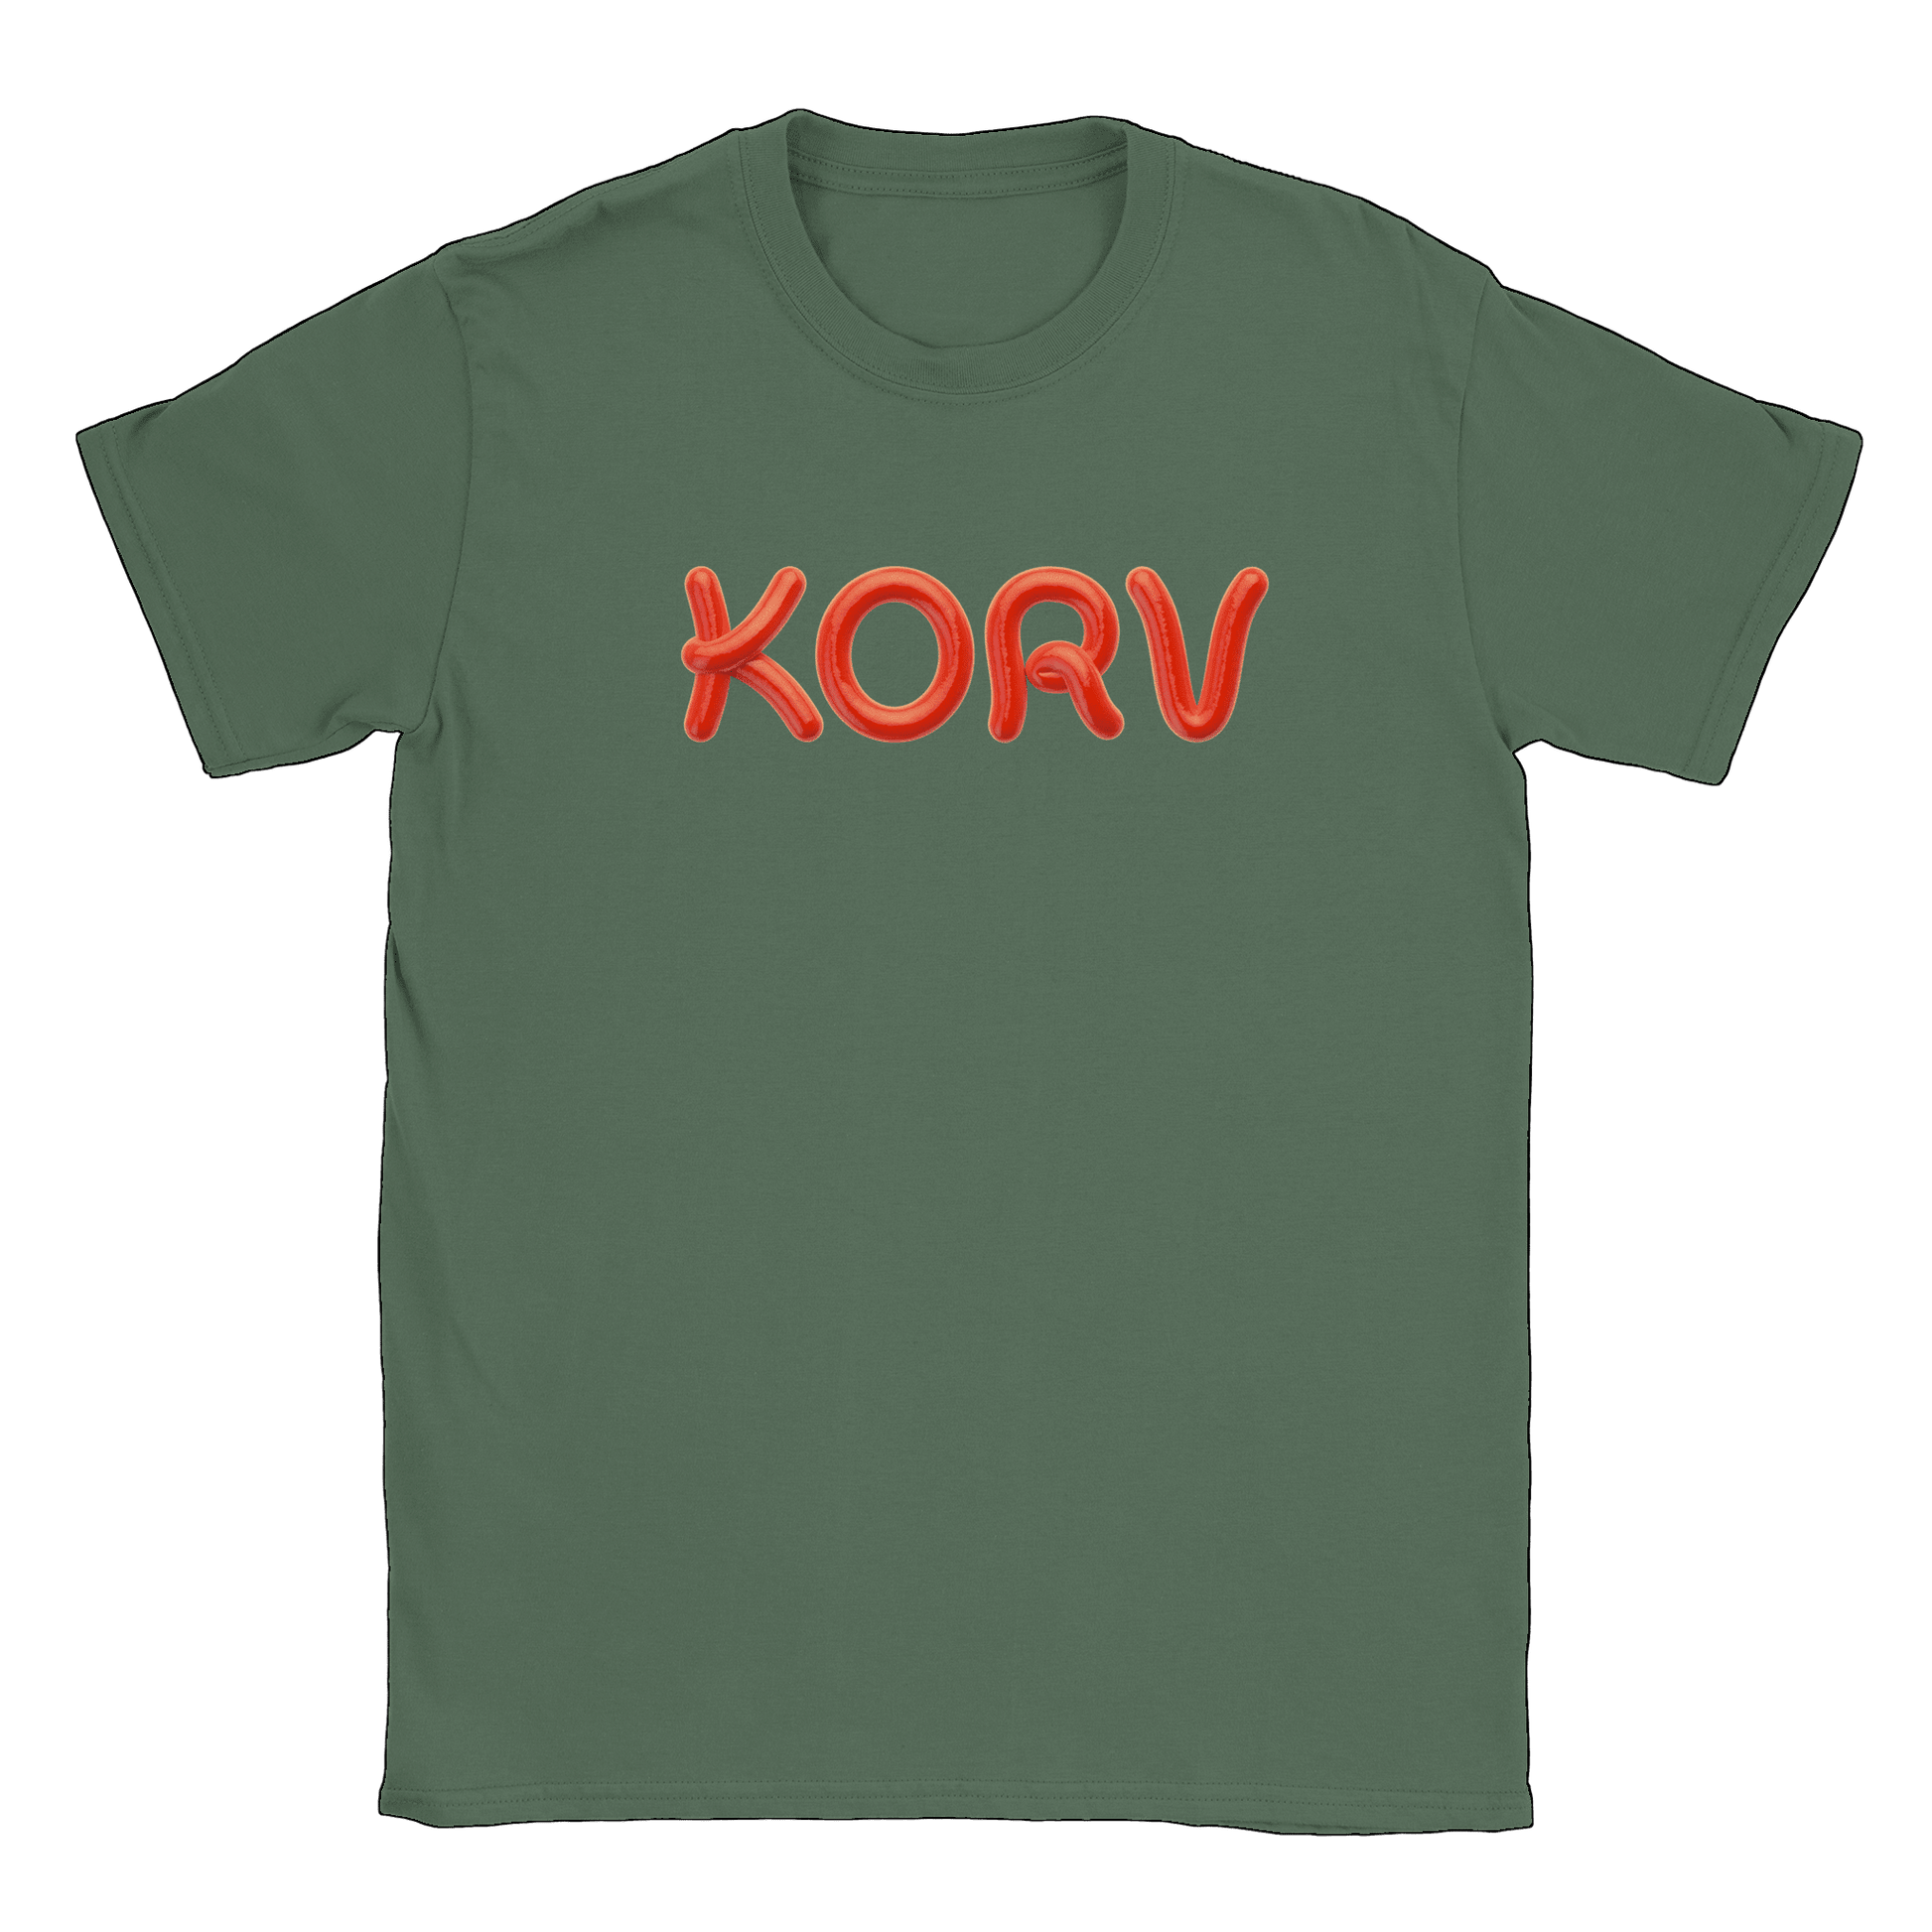 Korv - T-shirt Military Green